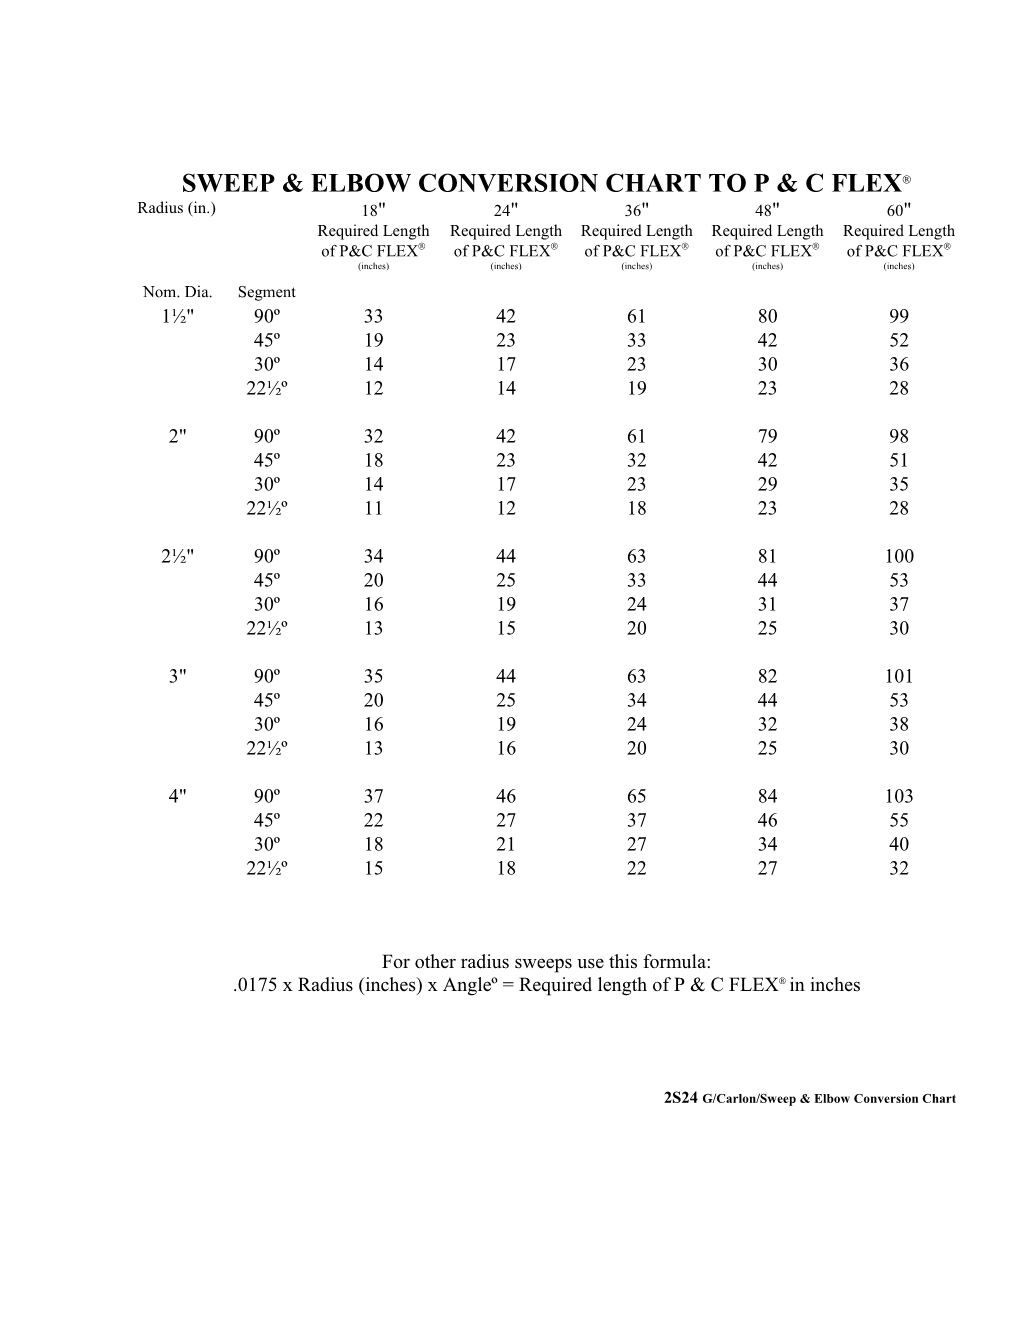 Sweep & Elbow Confersion Chart to P & C Flexò